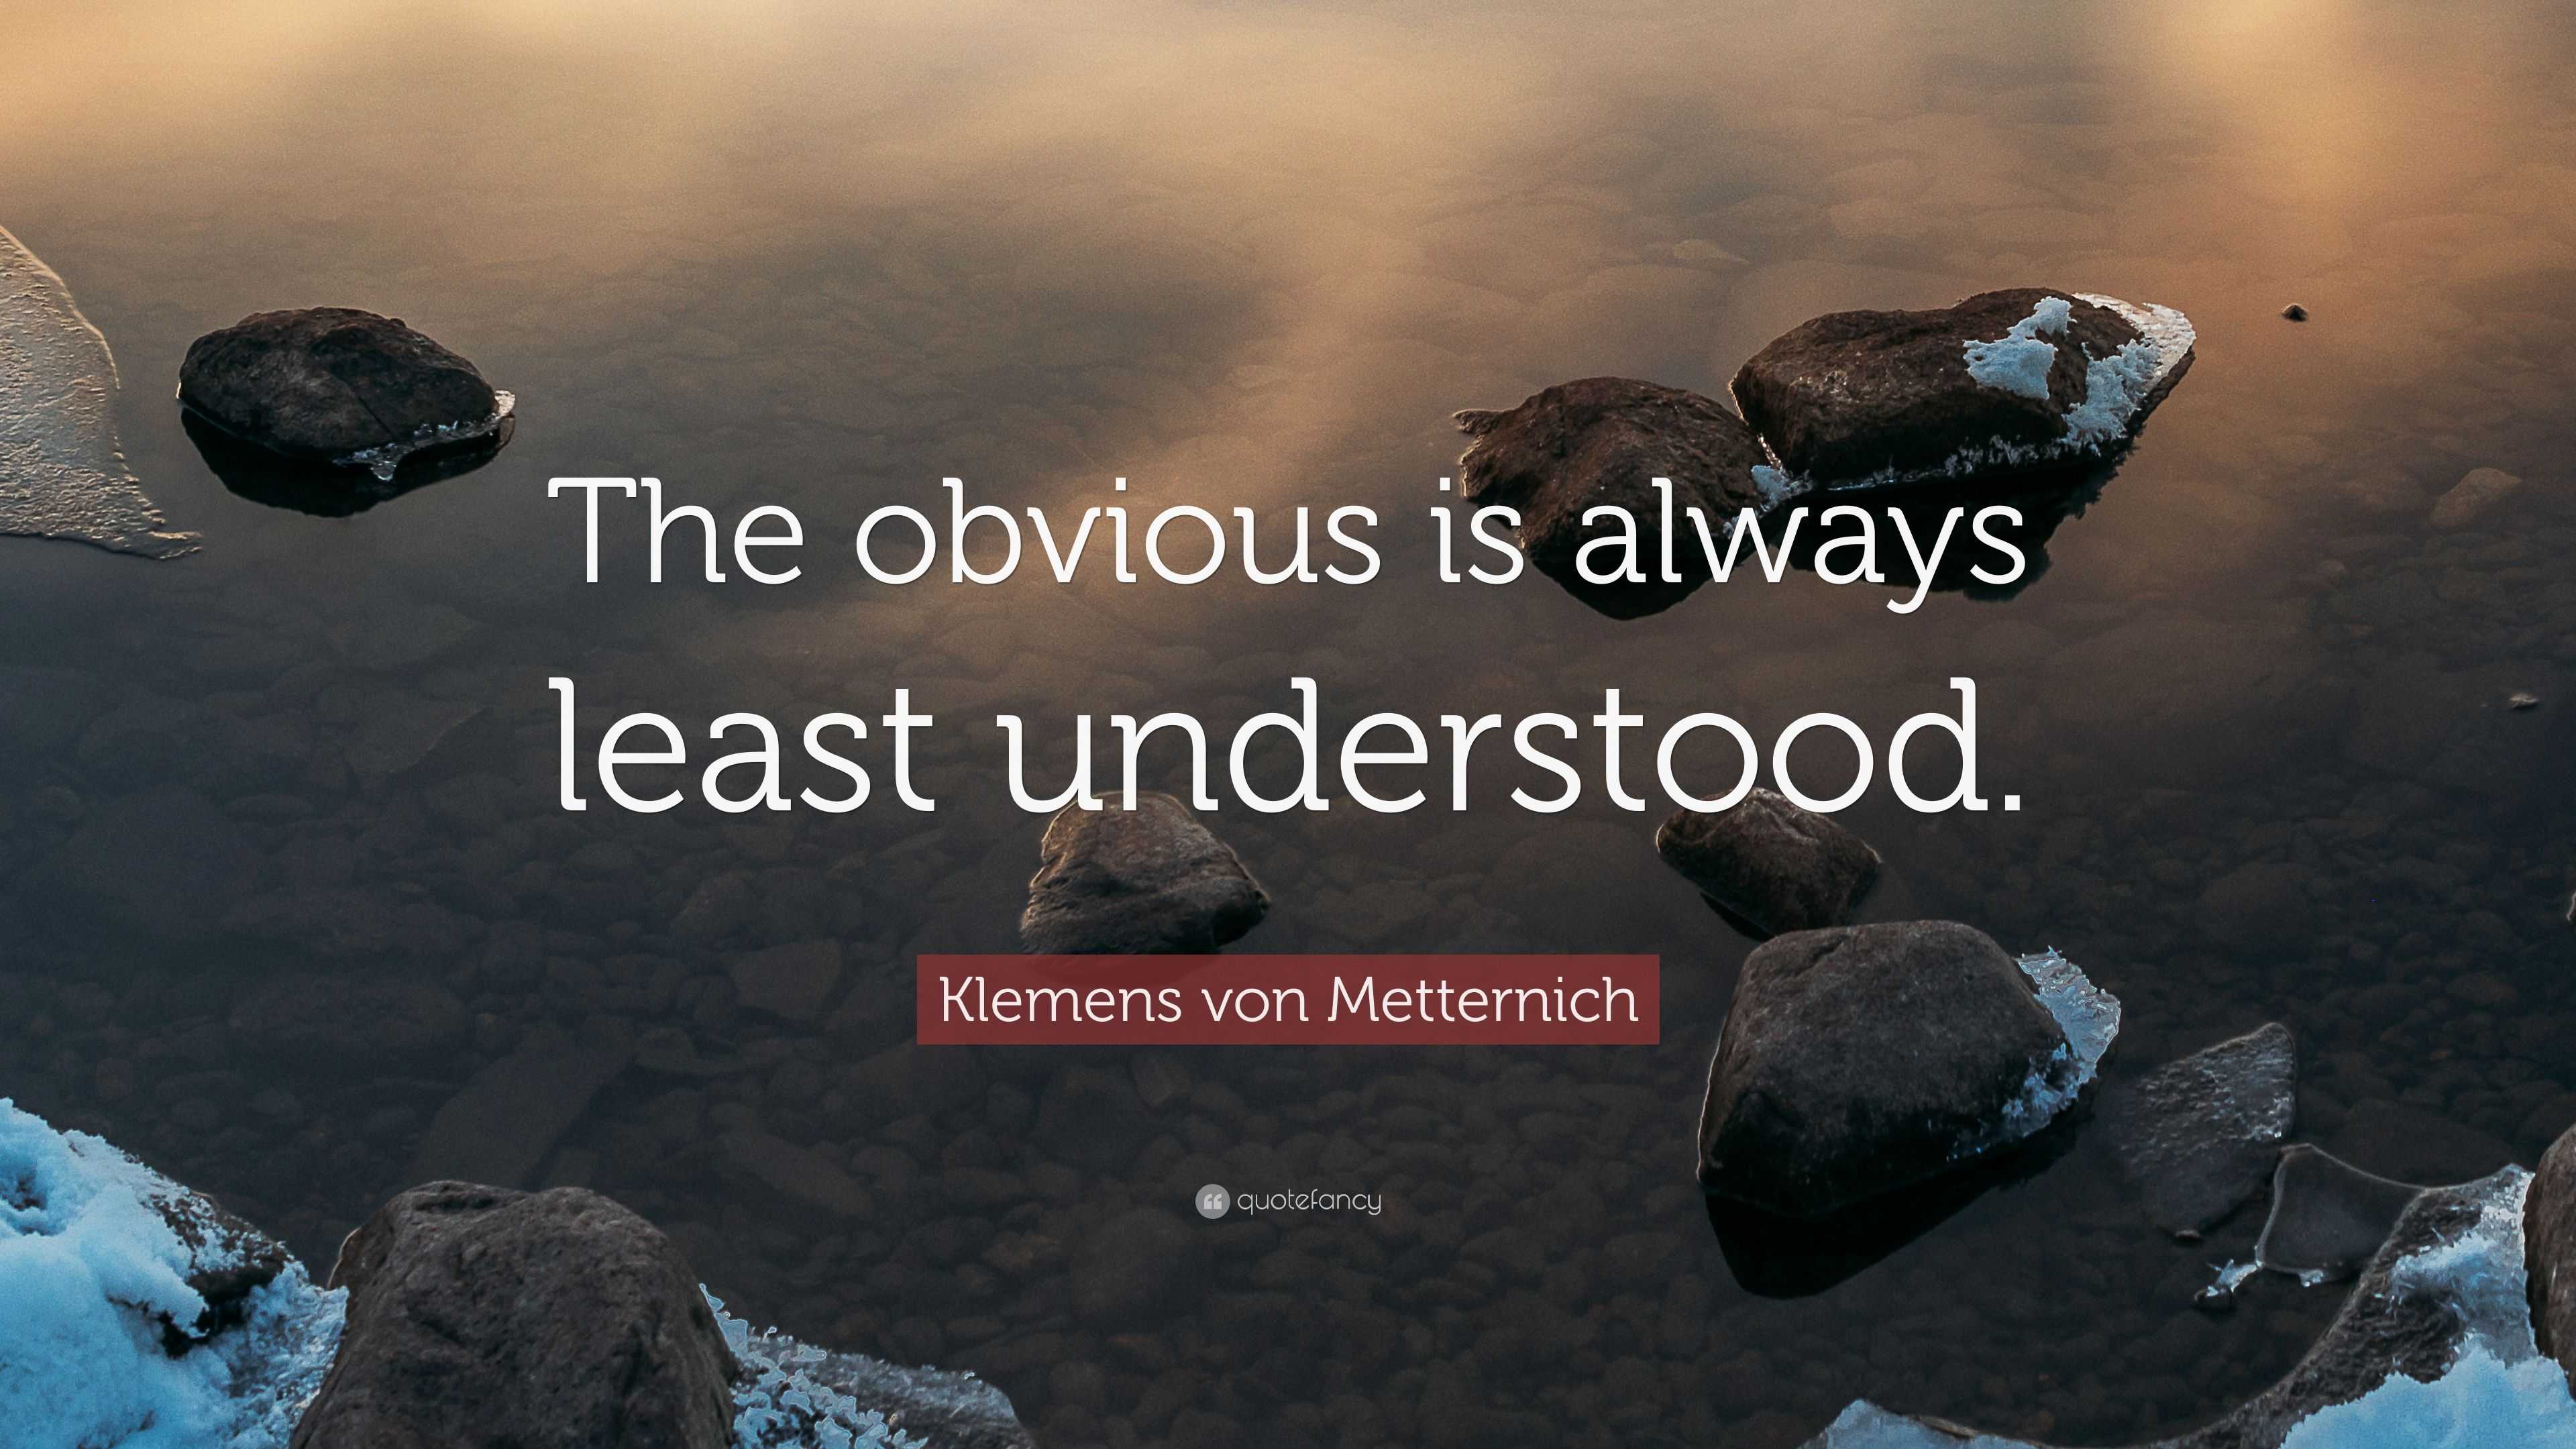 Klemens von Metternich Quote: "The obvious is always least understood." (9 wallpapers) - Quotefancy